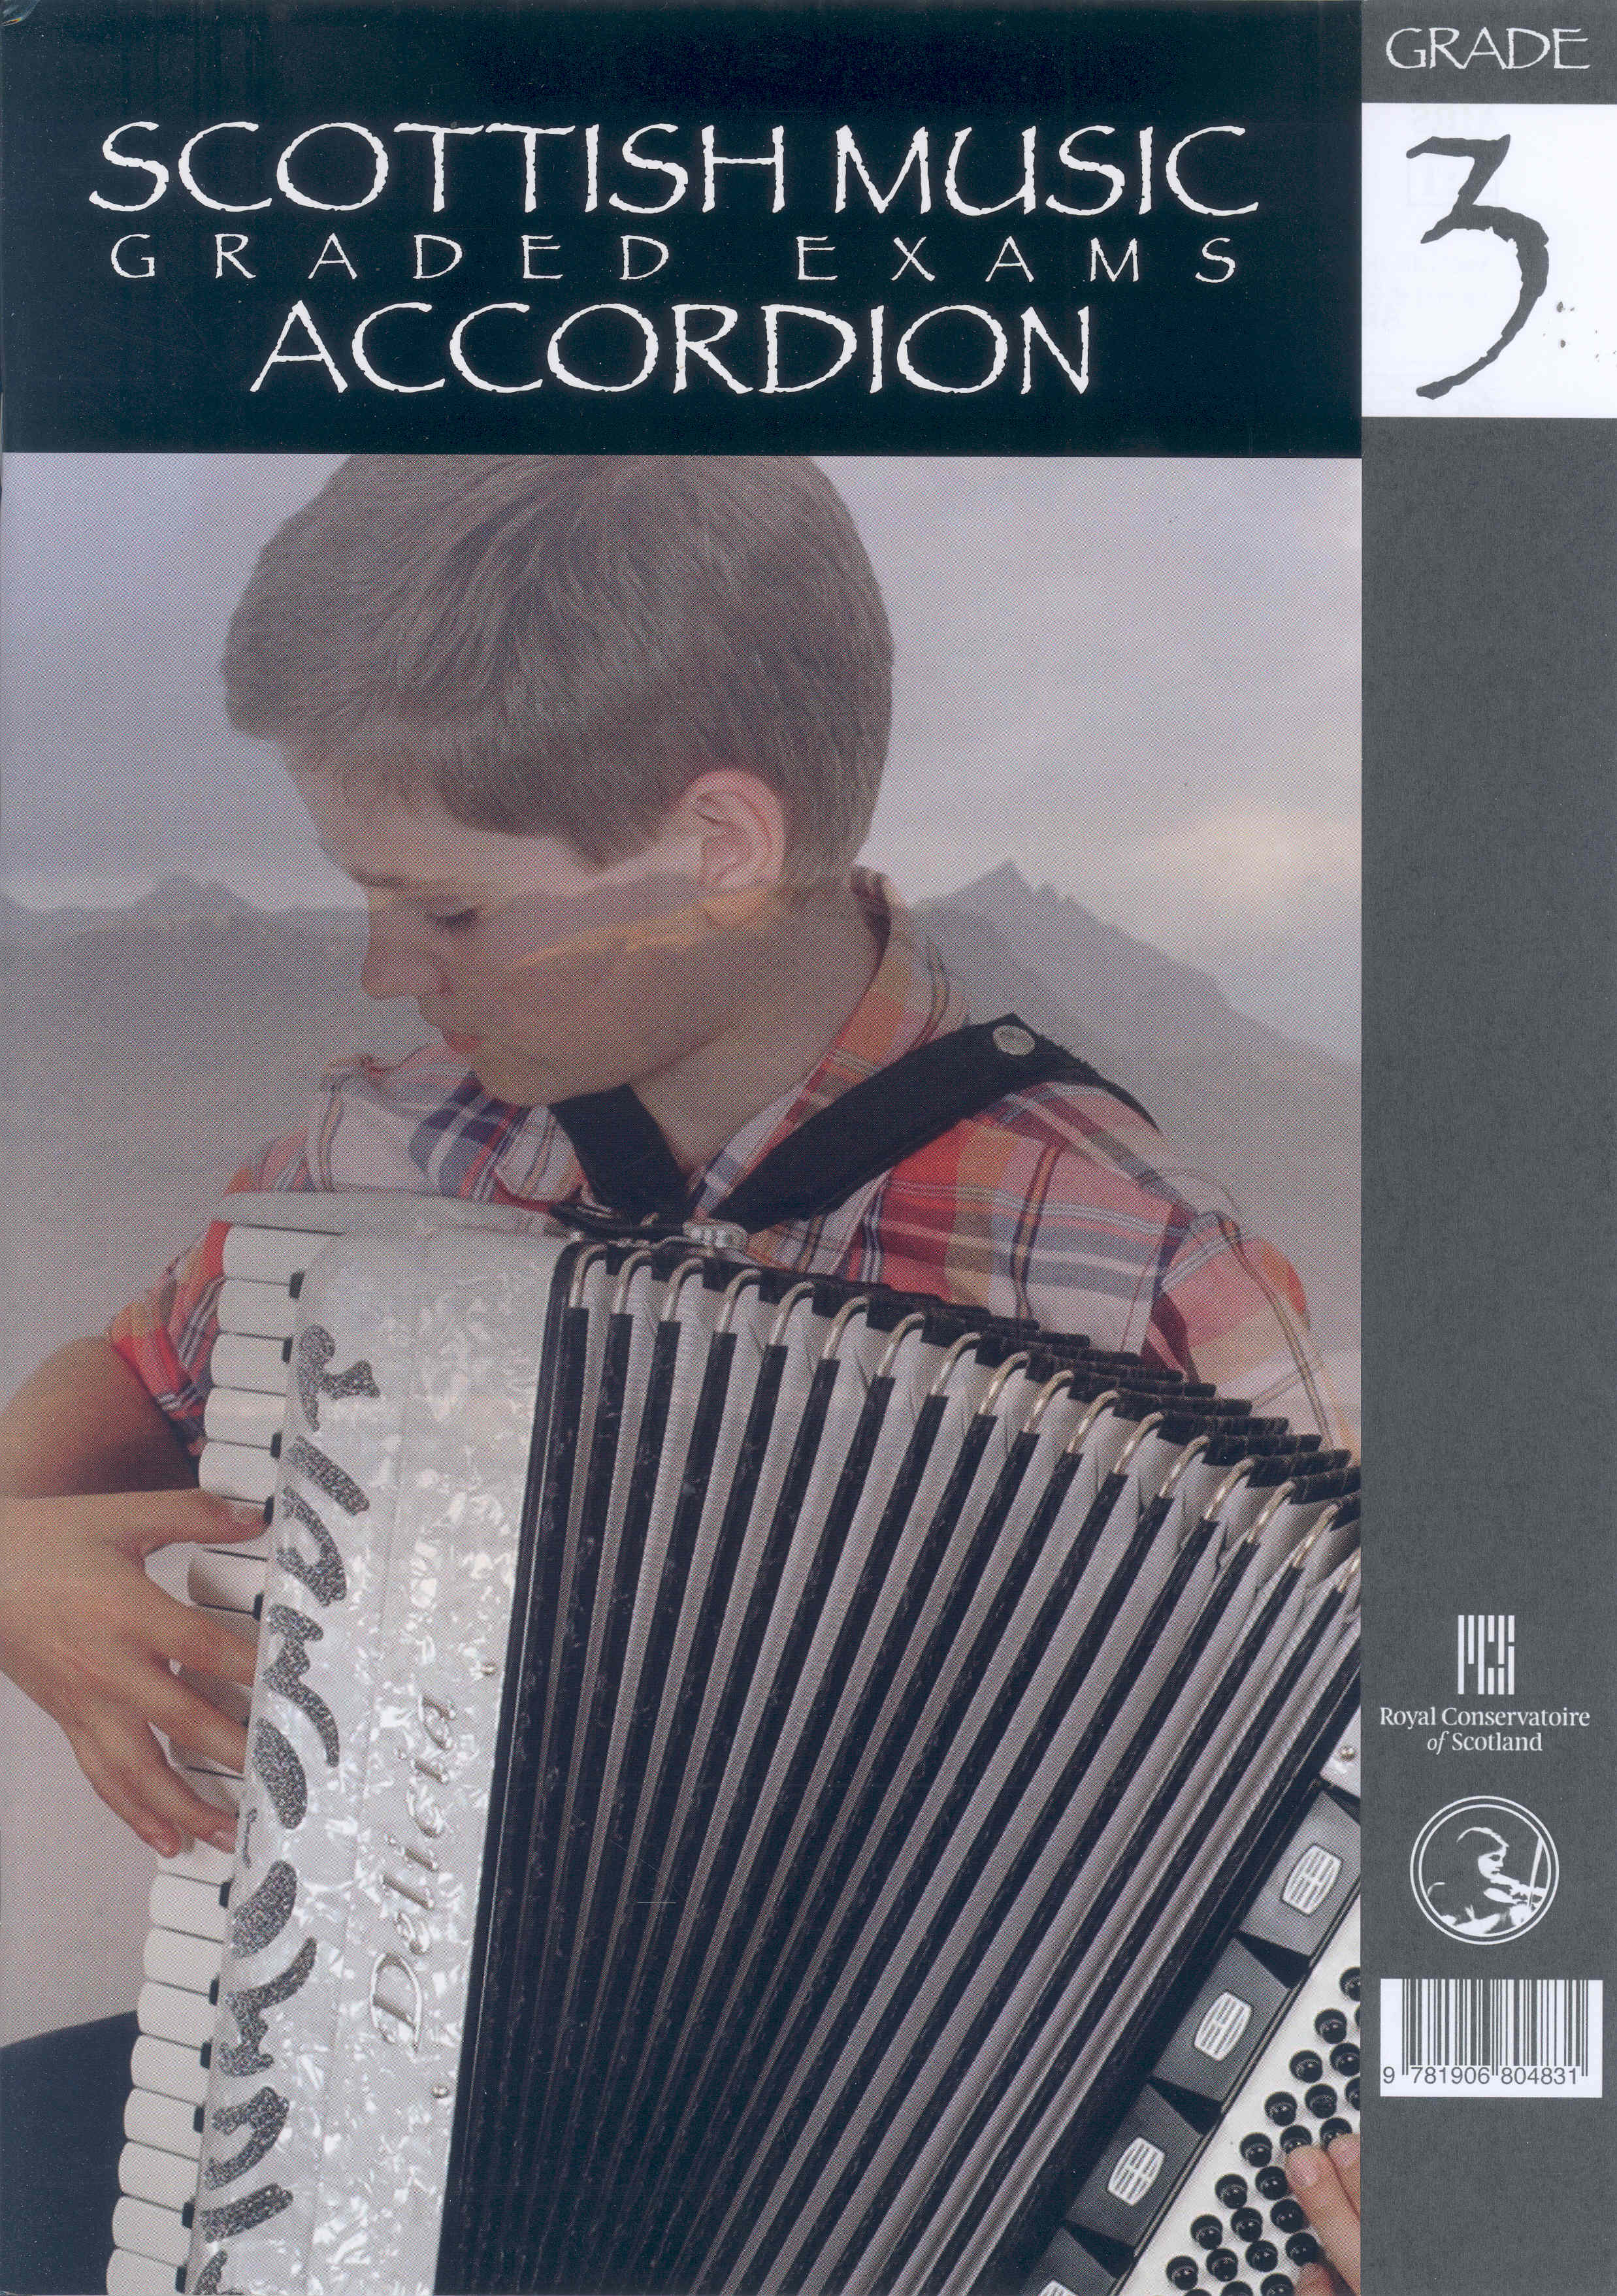 Scottish Music Exams Accordion Grade 3 -2020 Rsamd Sheet Music Songbook